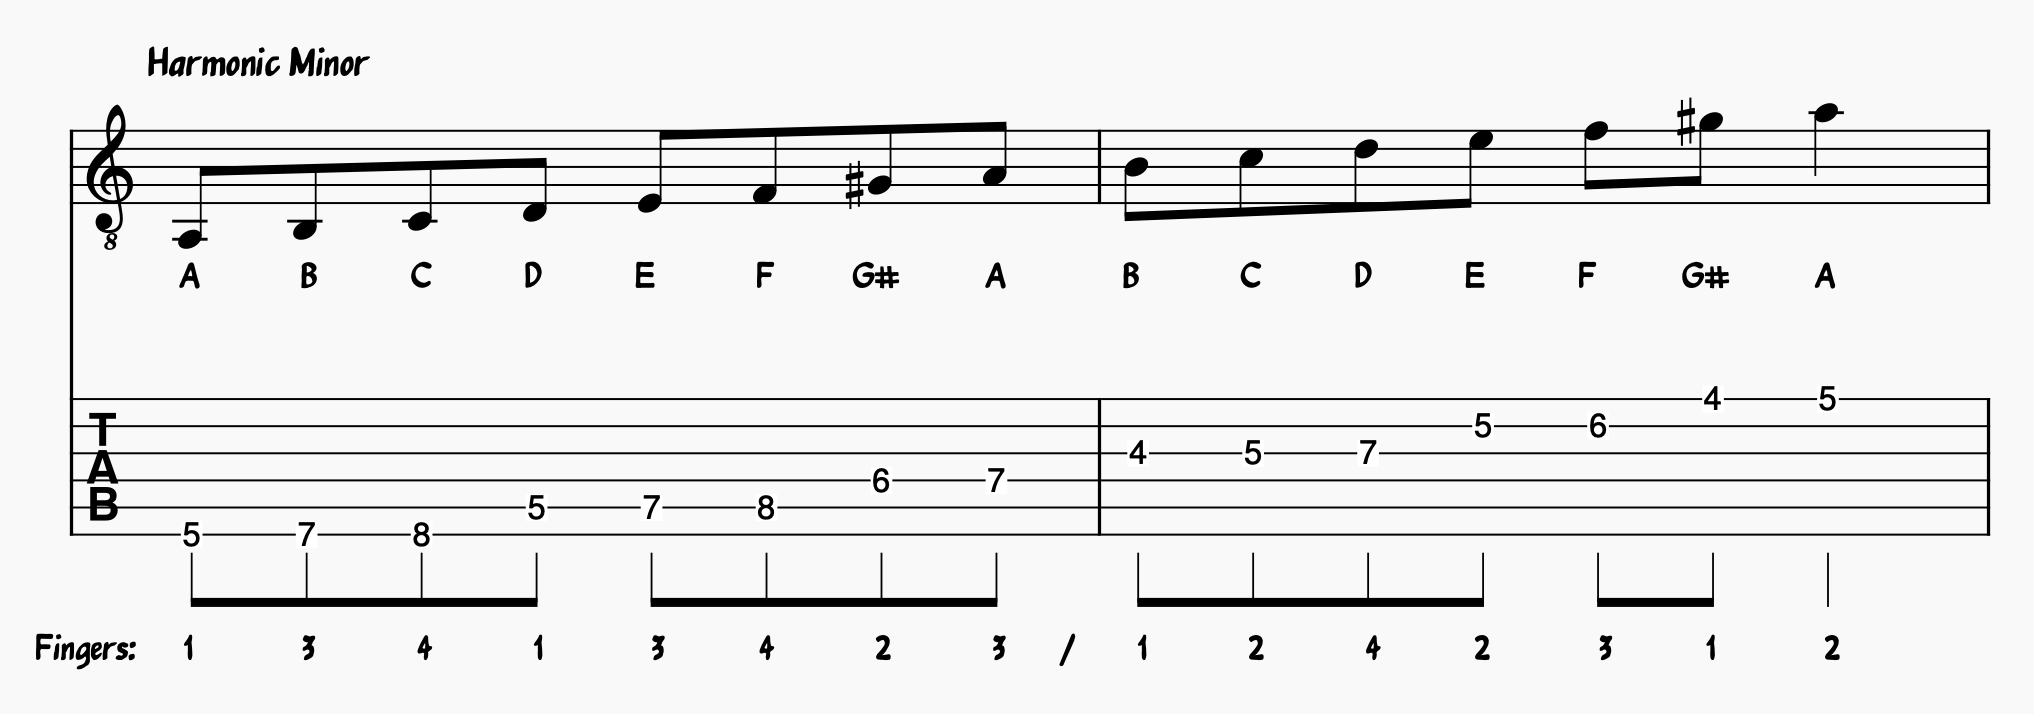 Harmonic Minor Scale on Guitar